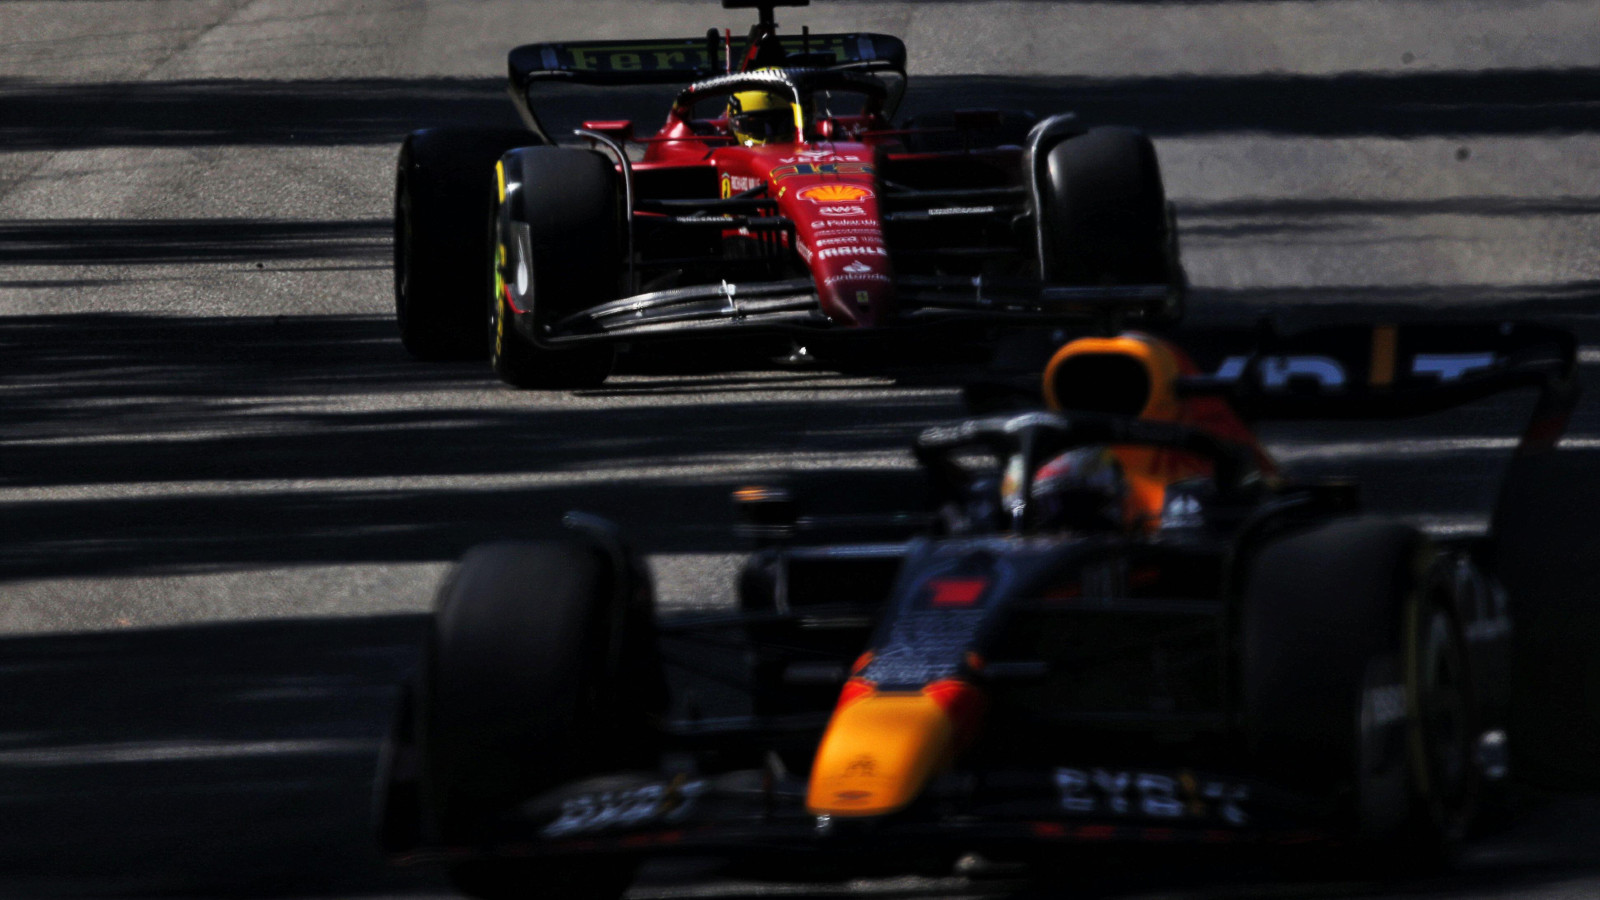 Ferrari's Charles Leclerc with Red Bull's Max Verstappen on track at the Italian Grand Prix. Monza, September 2022.